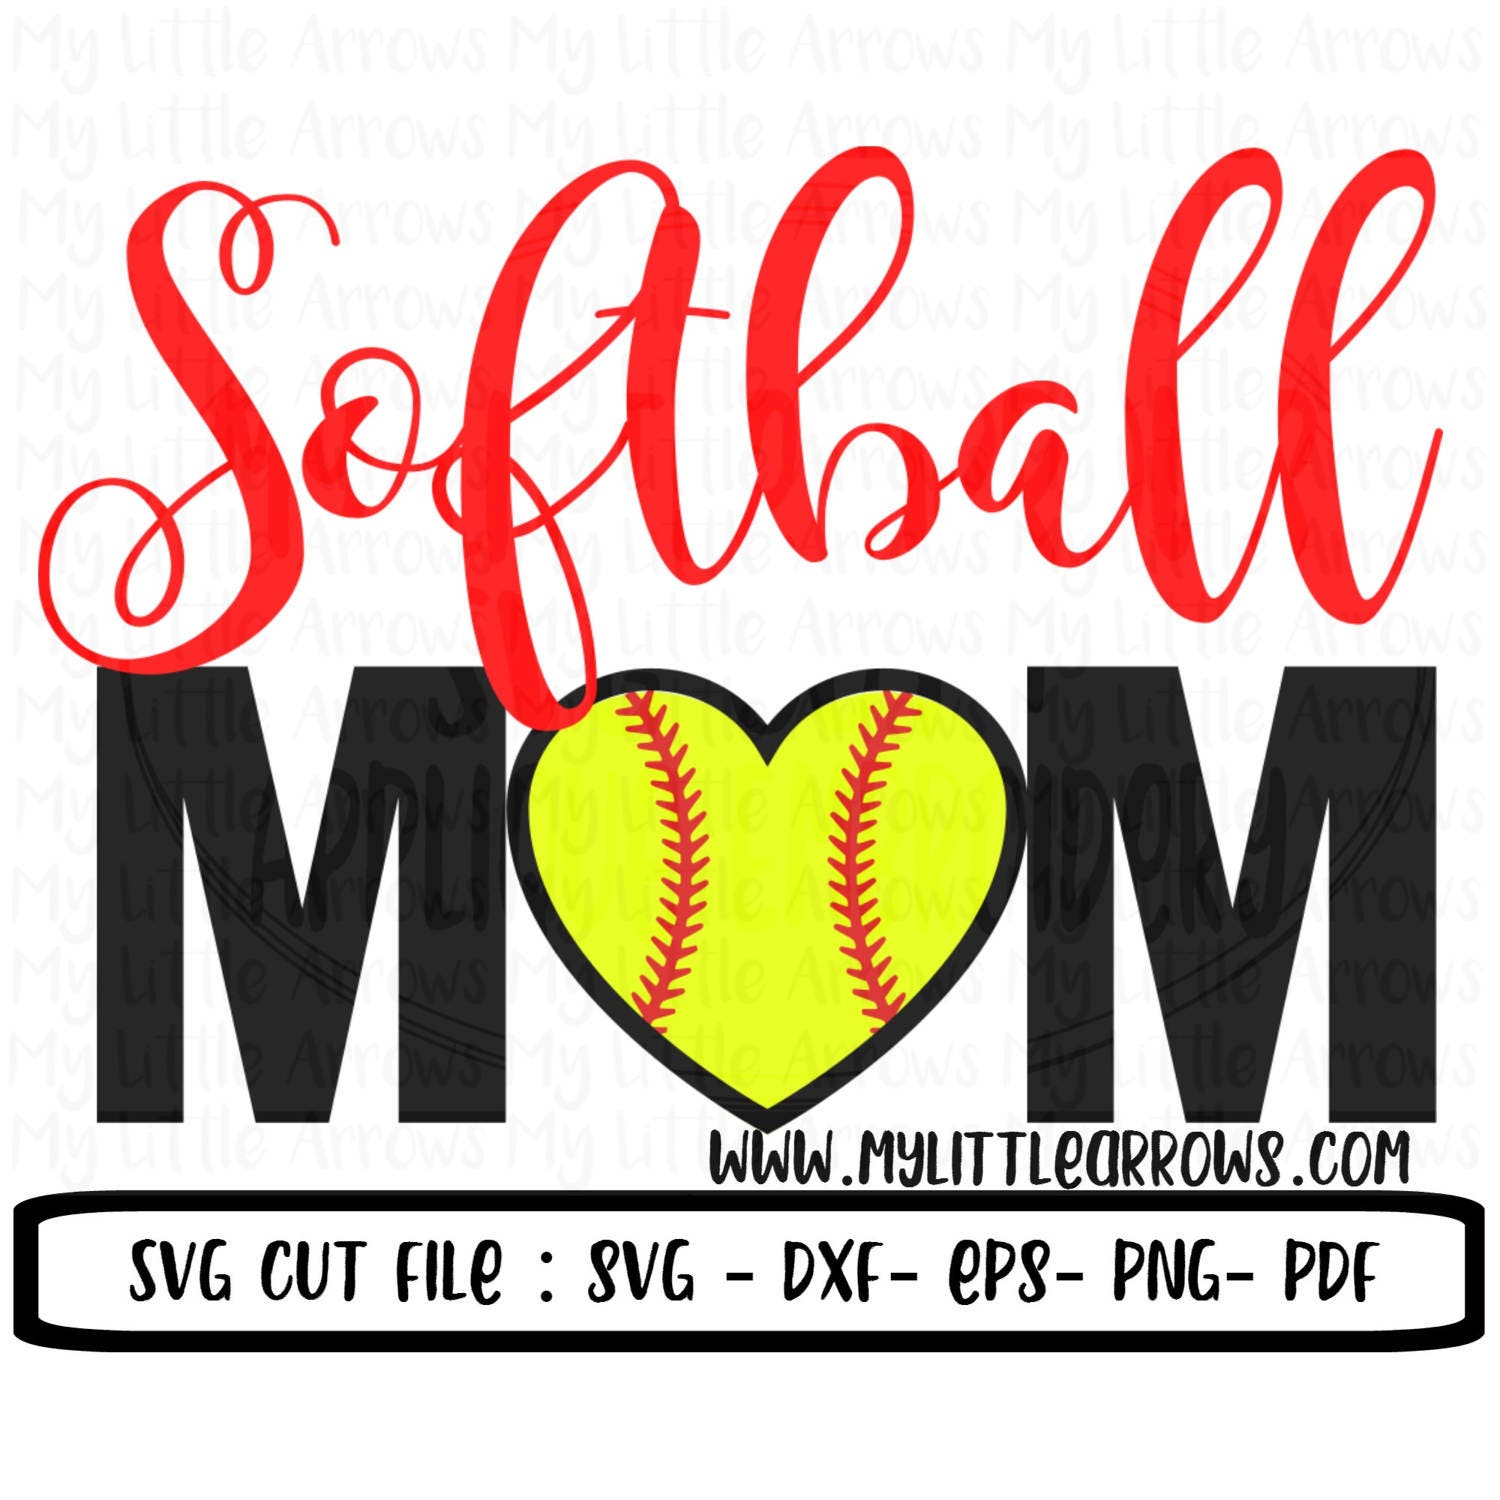 Download Softball mom svg softball heart svg softball svg